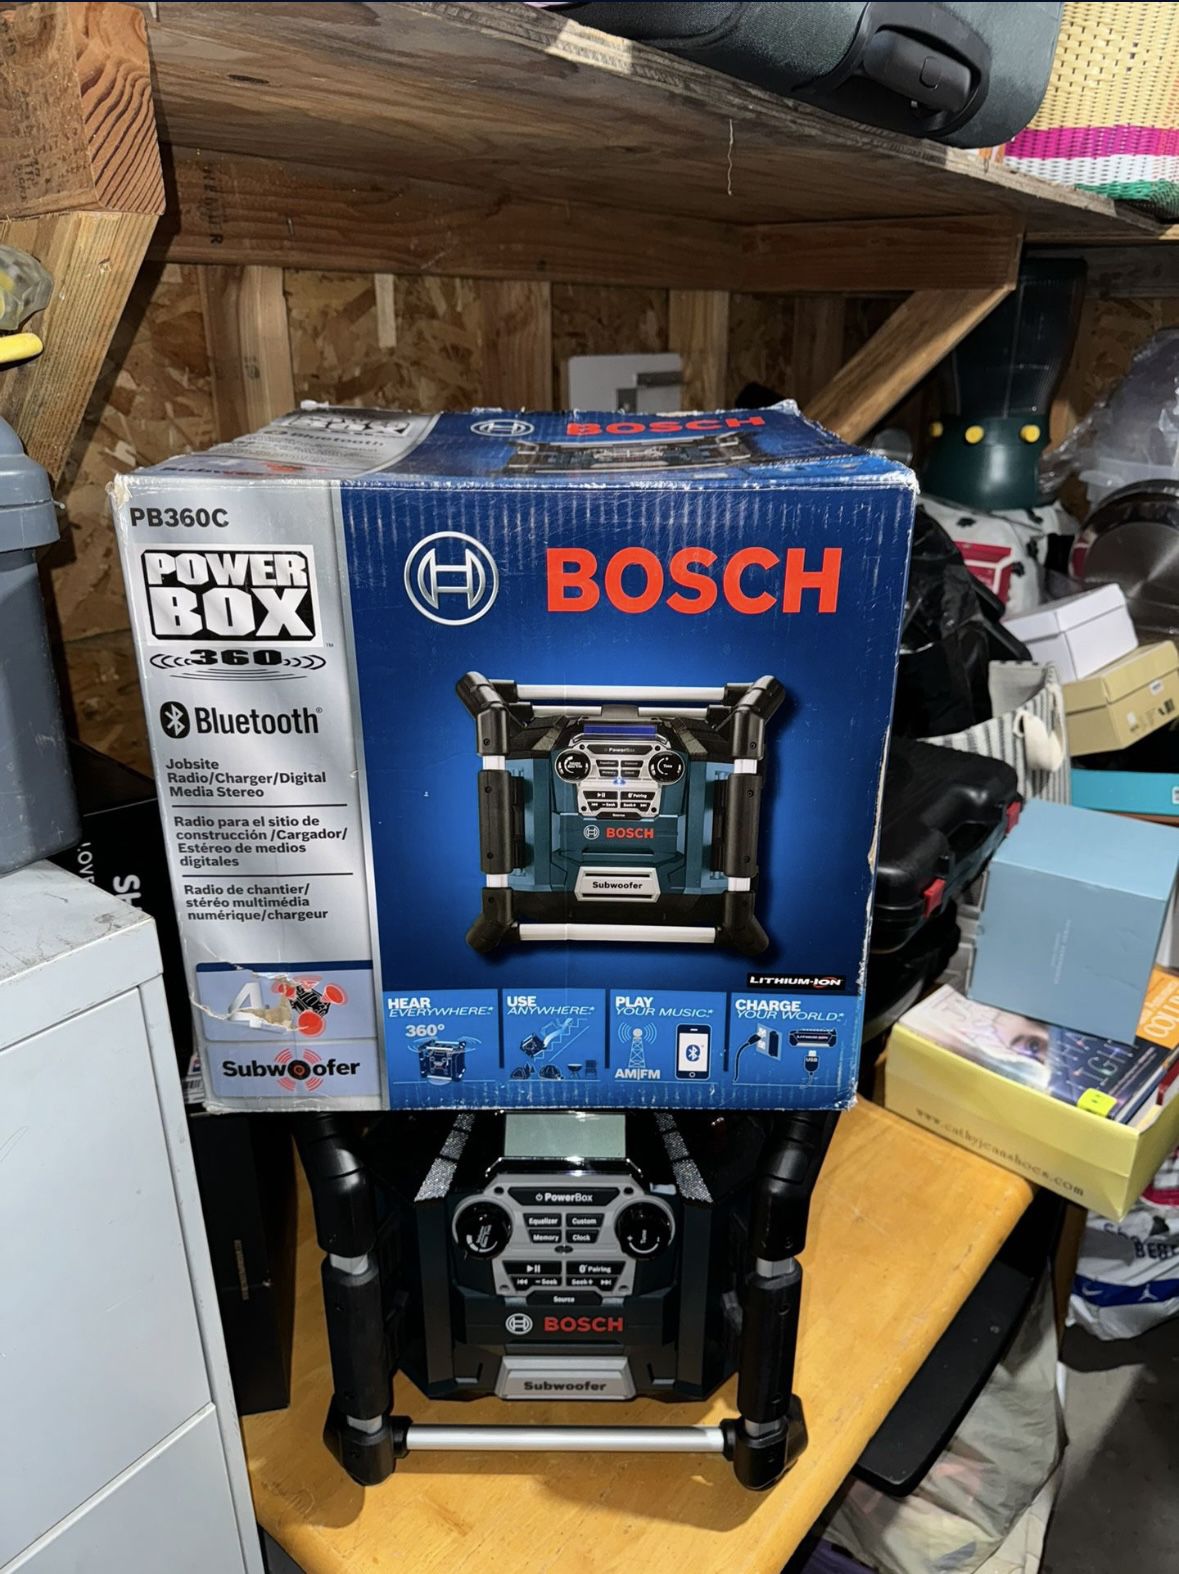 BOSCH Power Box 360 RADIO